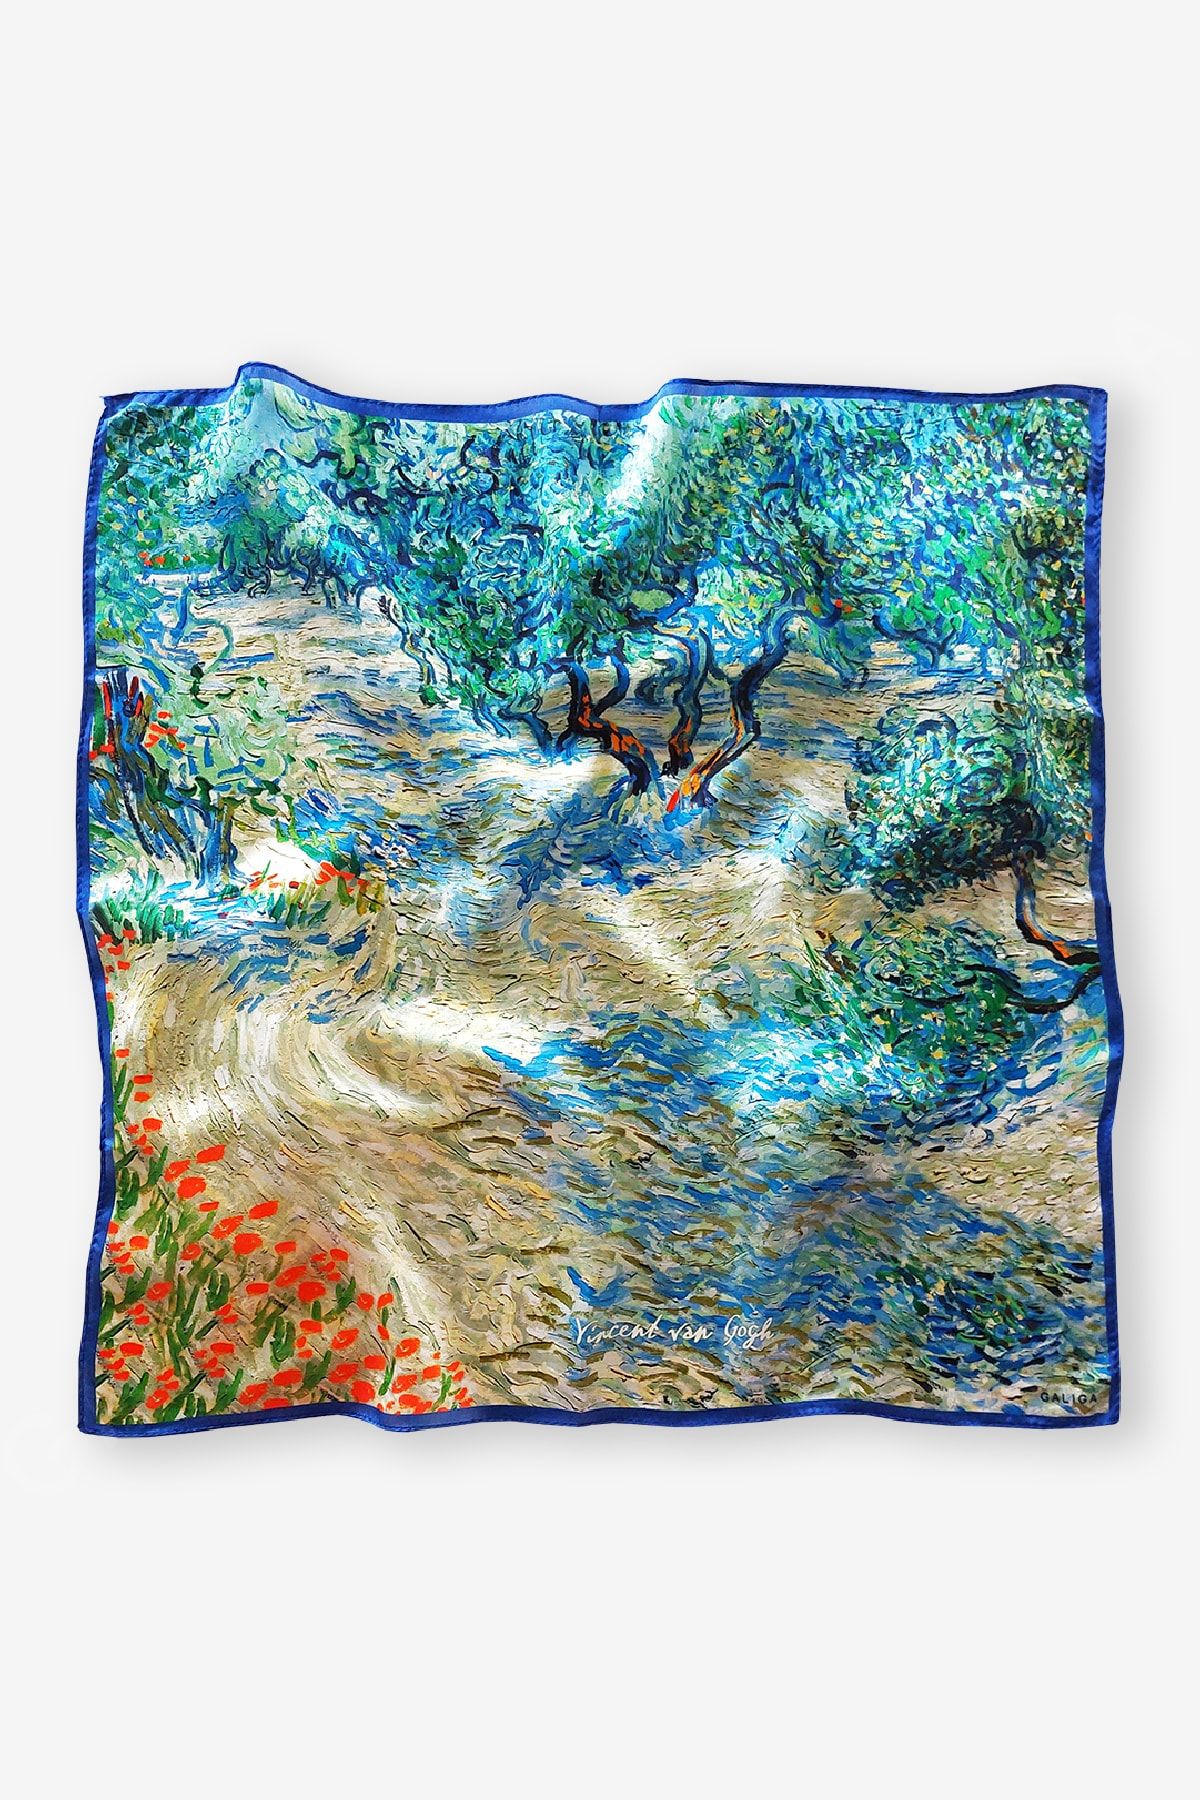 Galiga Van Gogh Olıve %100 Ipek Fular 55x55cm "art On Silk"